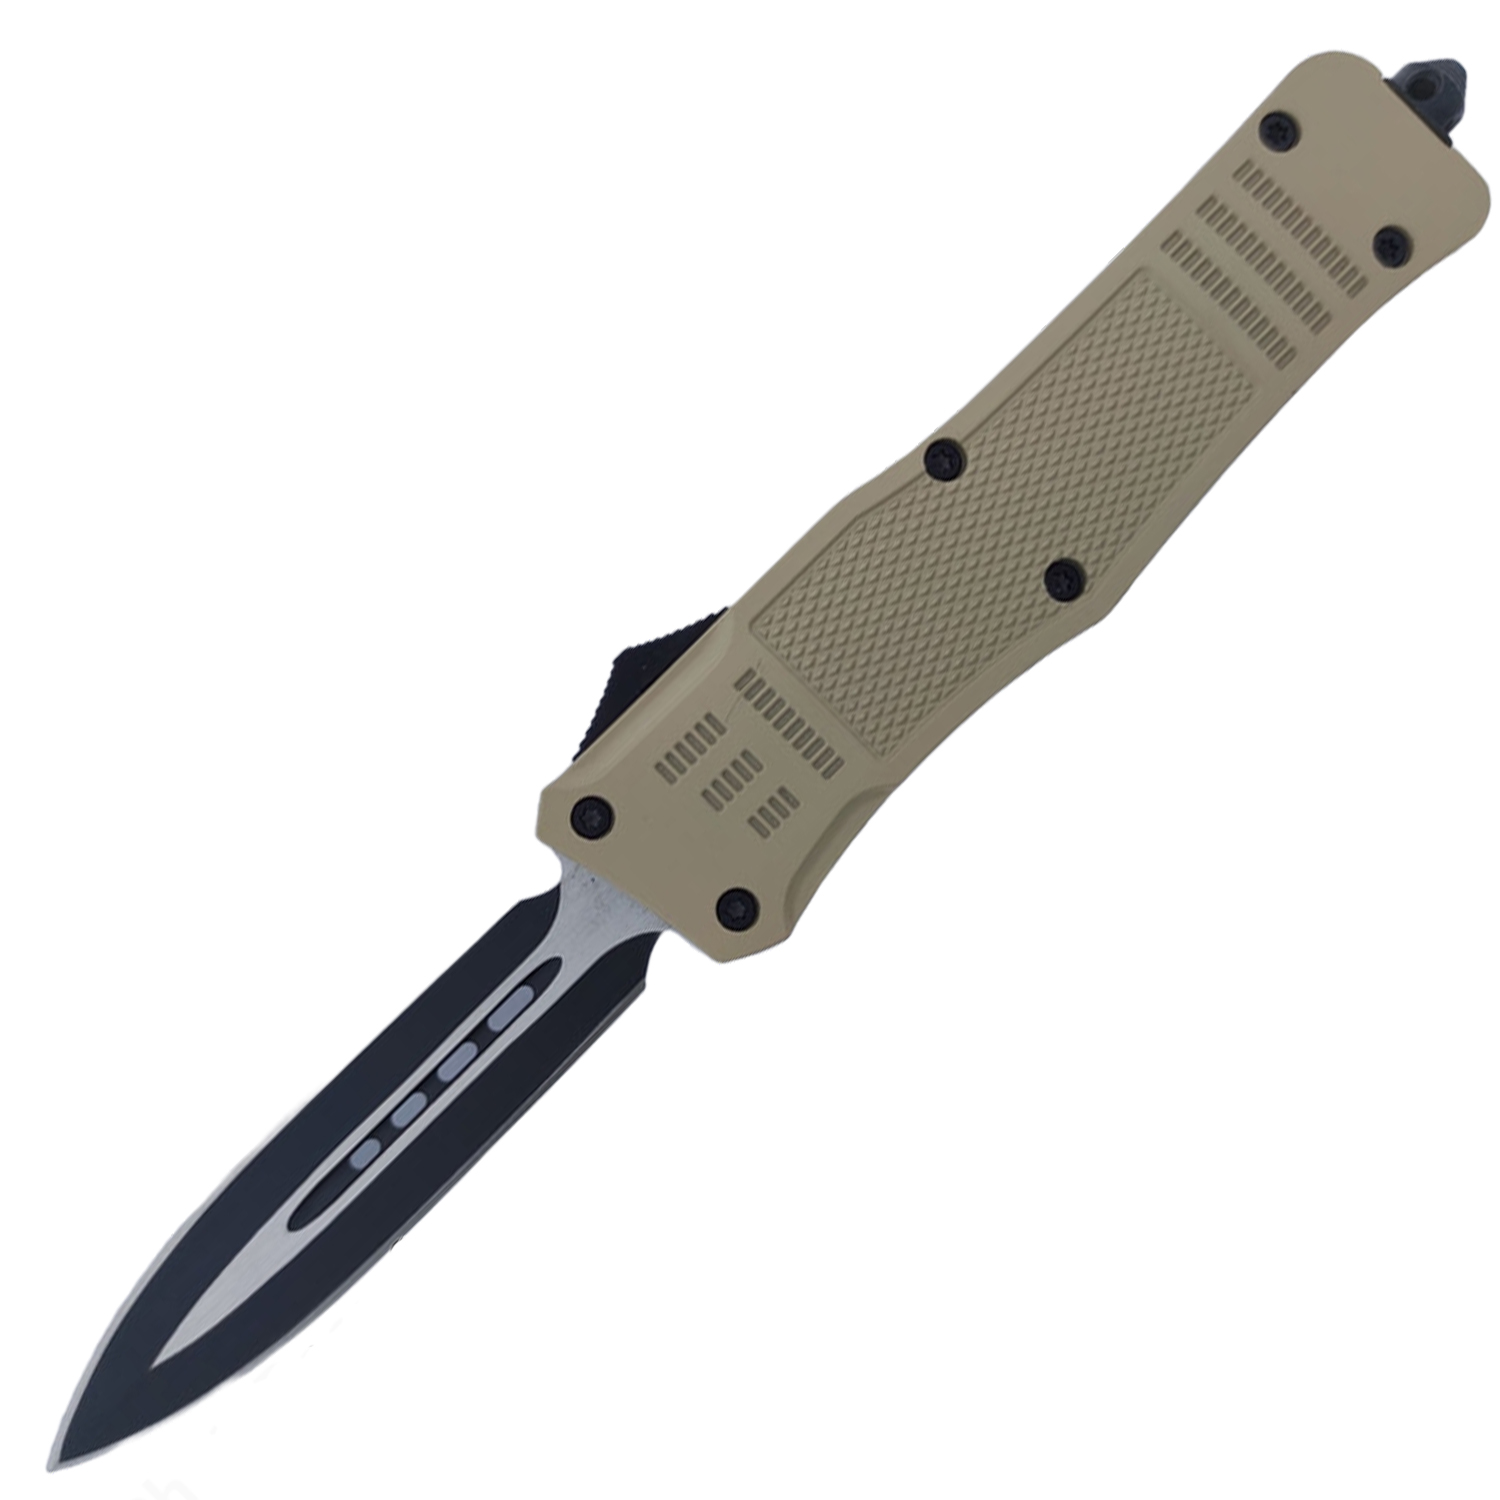 Covert OPS USA OTF Automatic Knife 9 inch Beige D2 Steel Blade DEdge